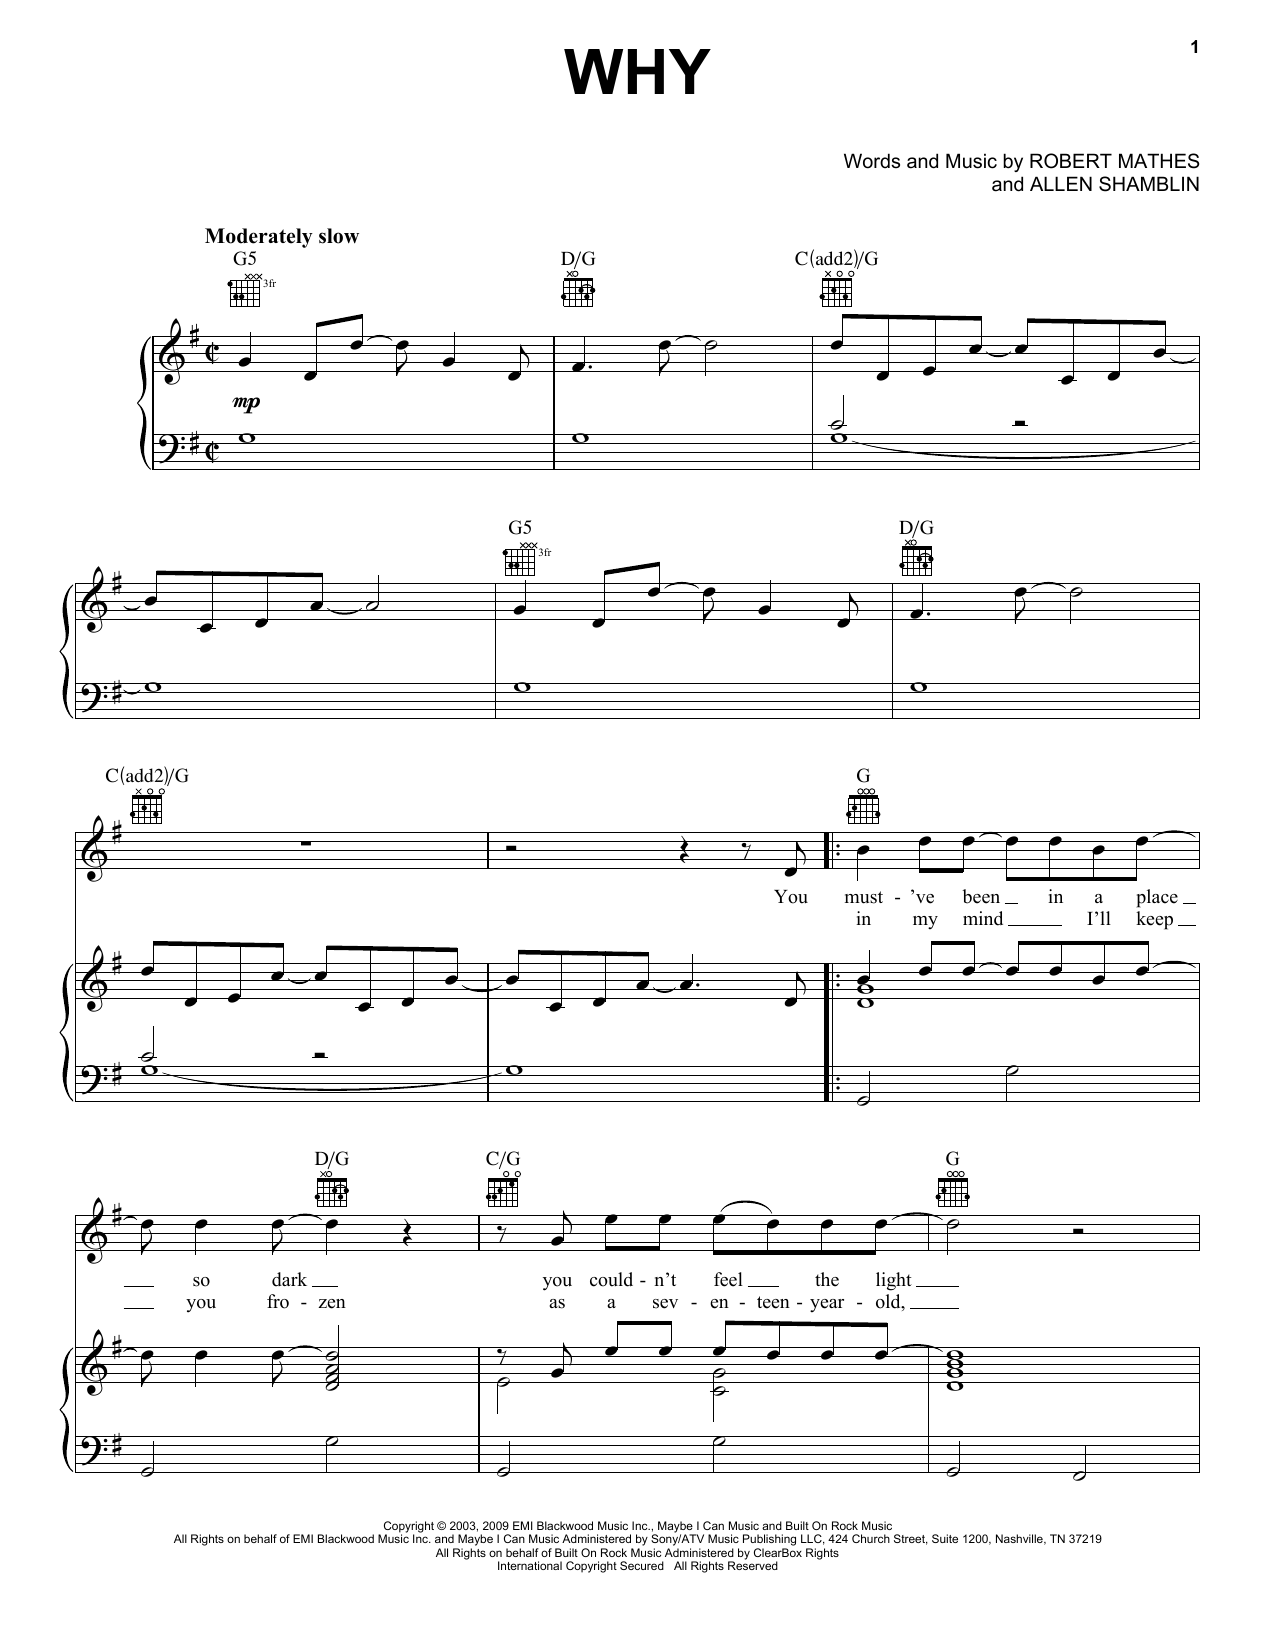 Rascal Flatts "Why" Sheet Music Notes, Chords Piano